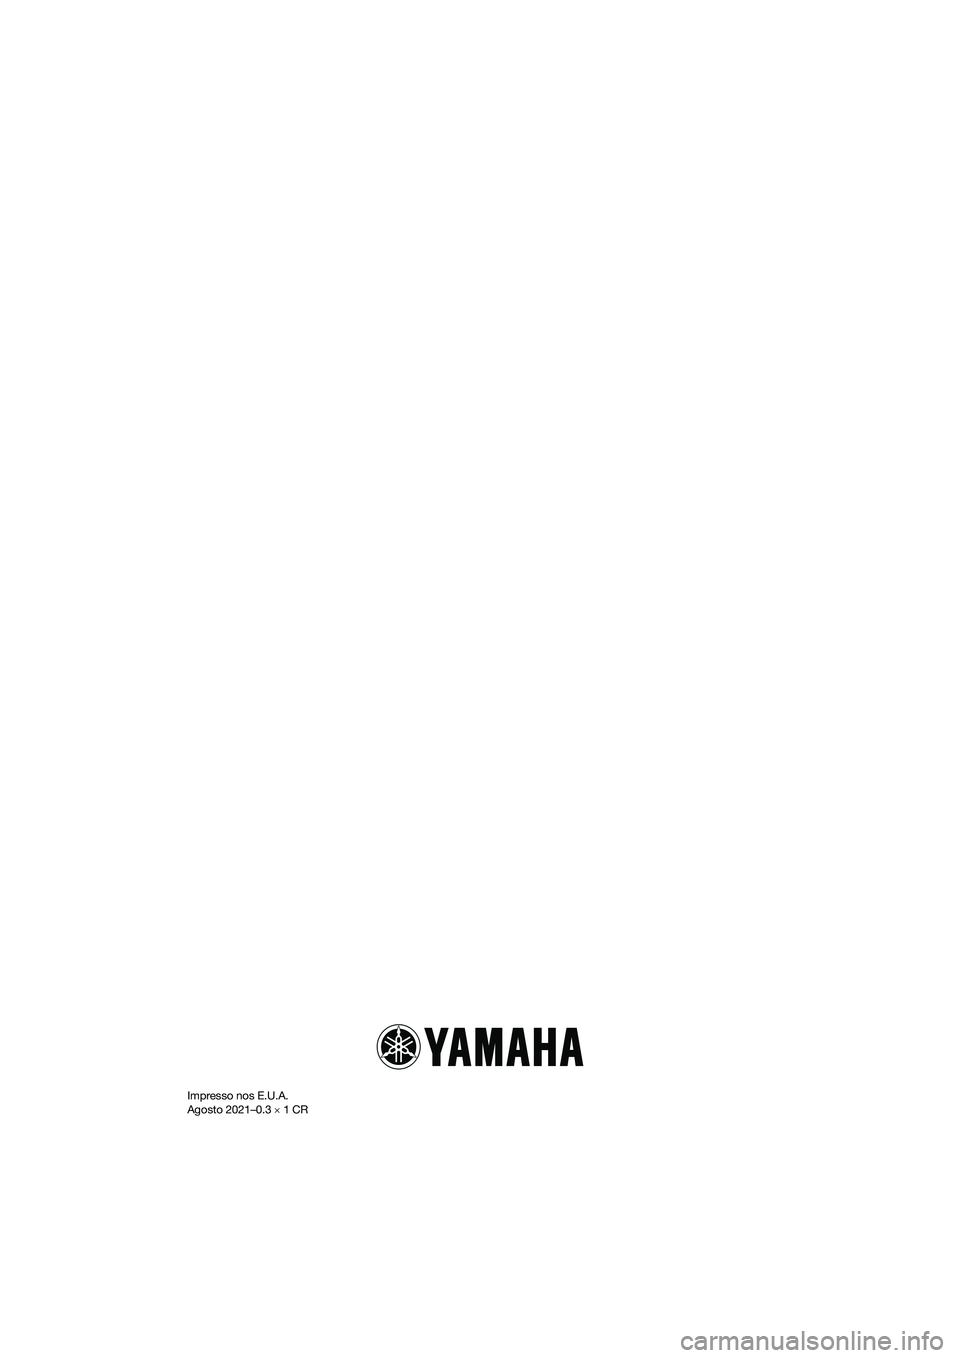 YAMAHA EX DELUXE 2022  Manual de utilização (in Portuguese) Impresso nos E.U.A.
Agosto 2021–0.3  1 CR
UF3Y75P0.book  Page 1  Monday, July 19, 2021  11:34 AM 